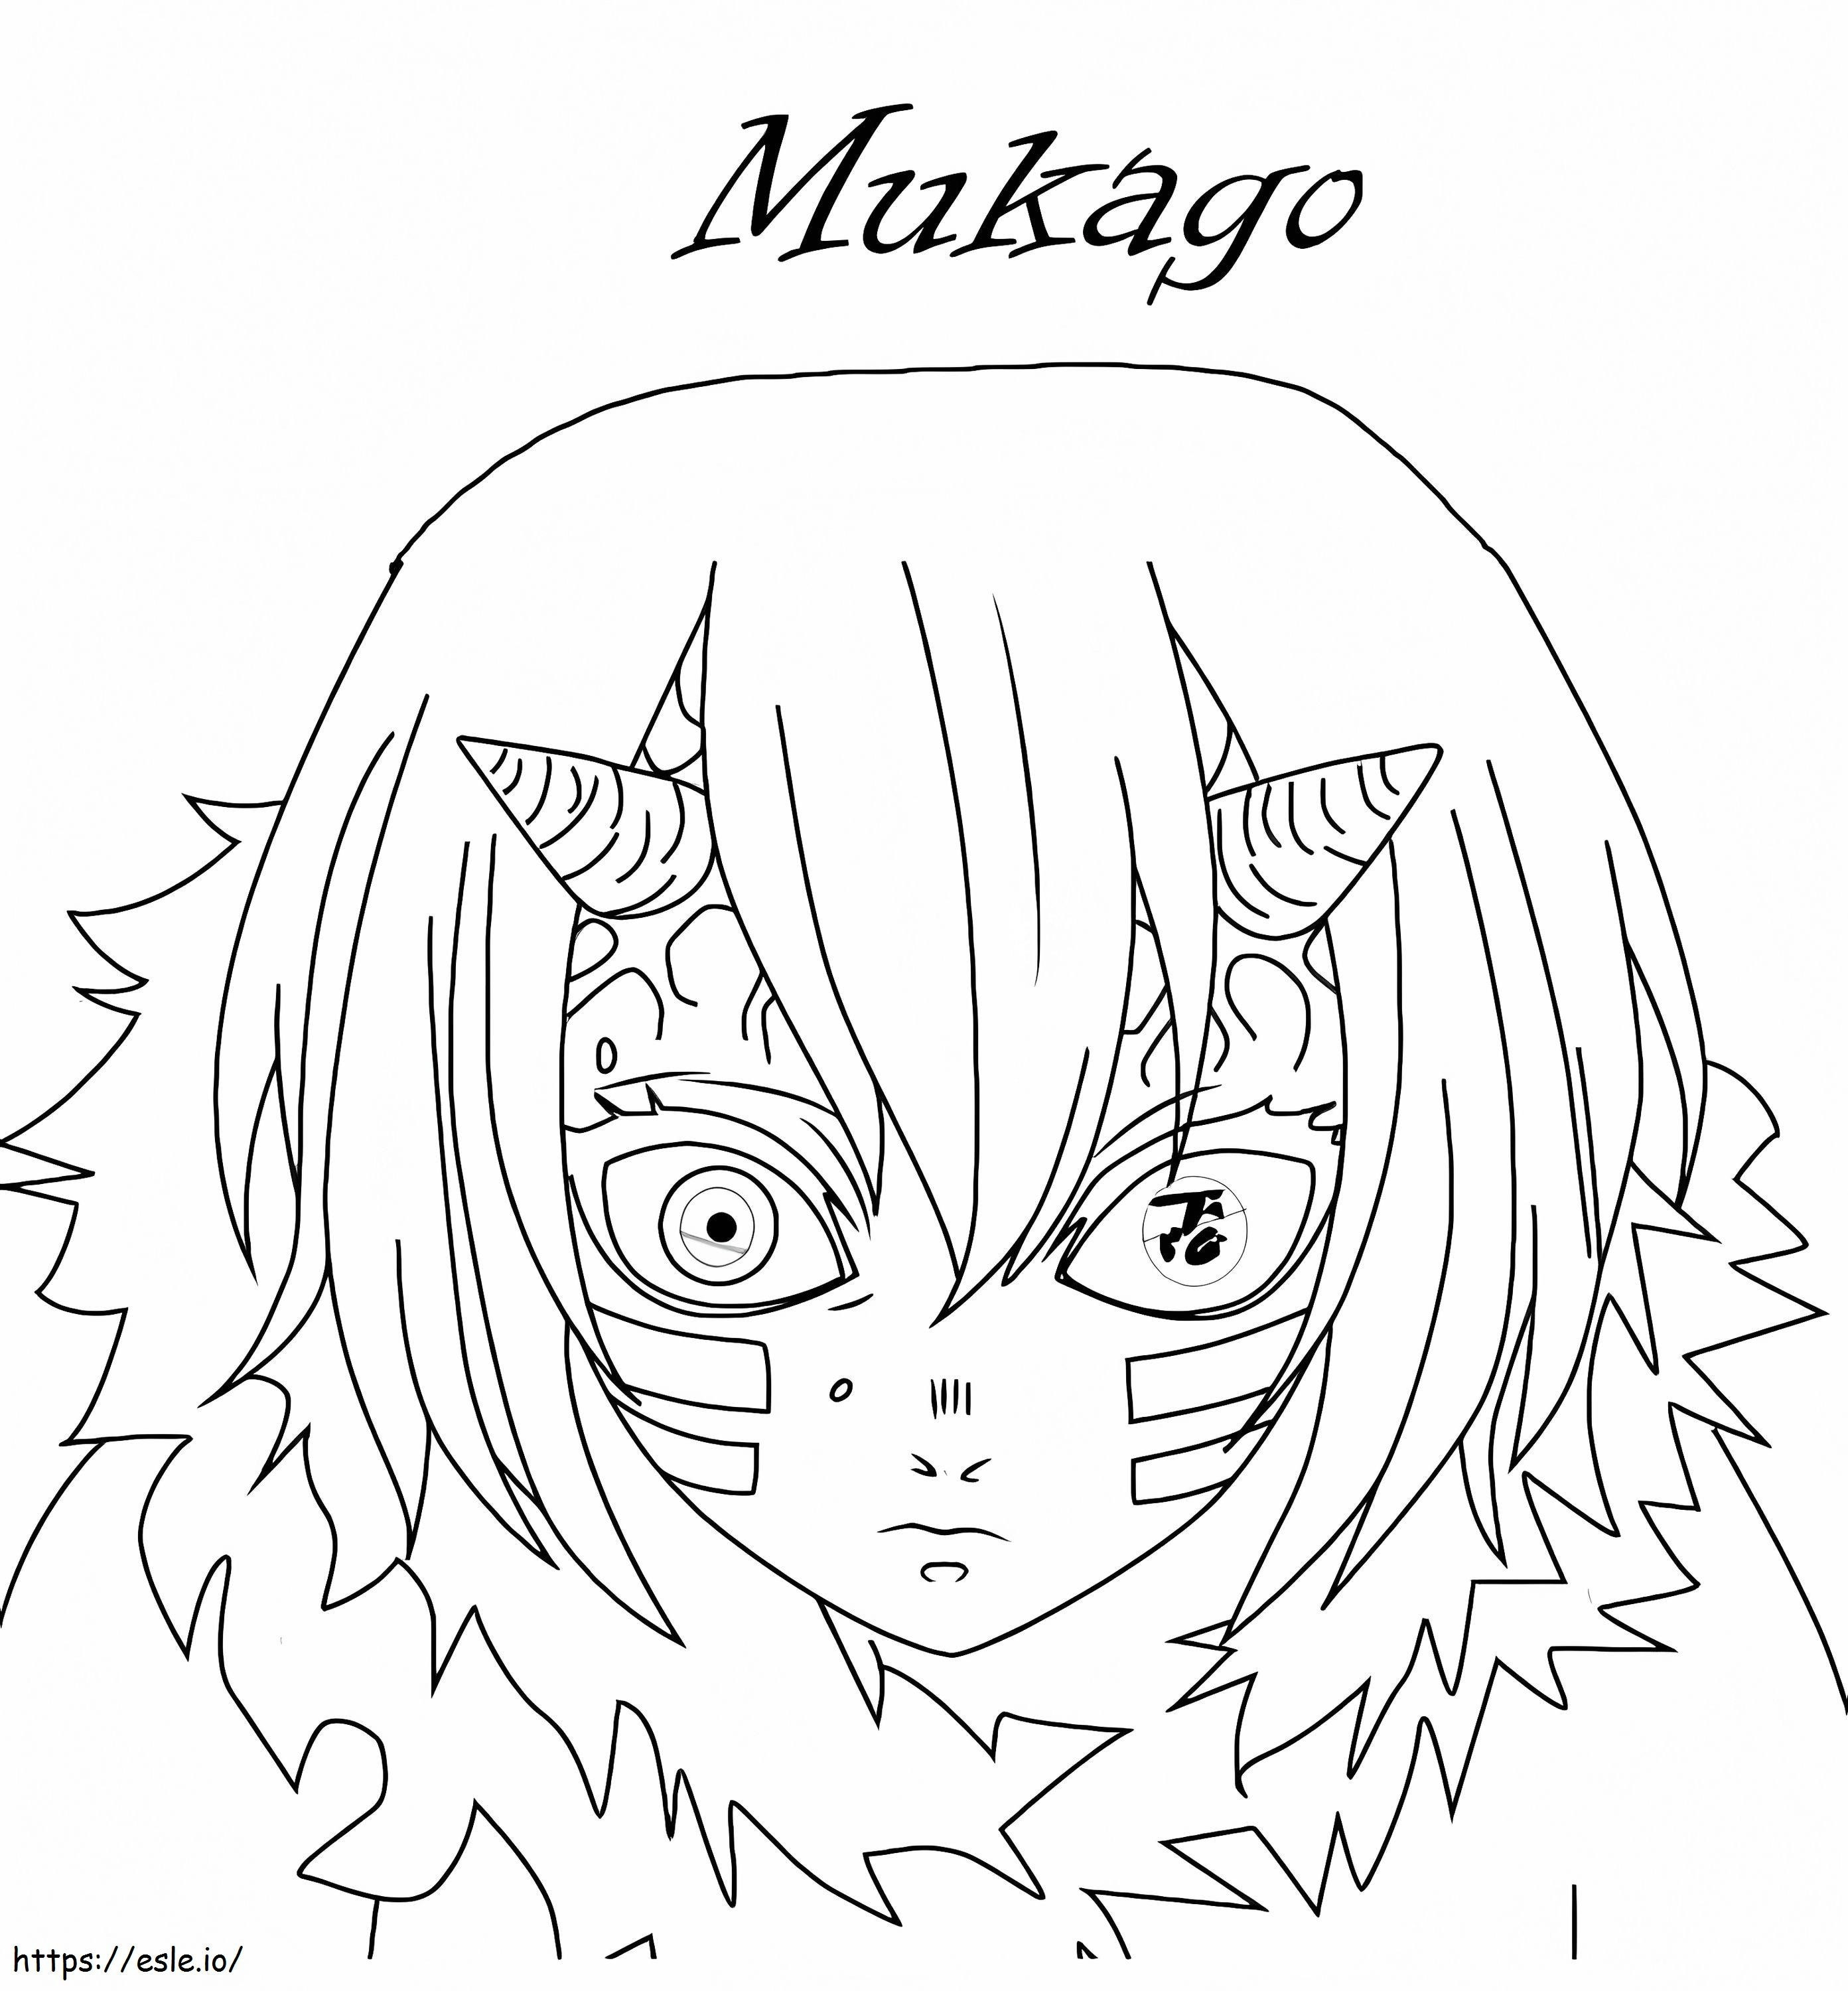 Demon Slayer Mukago coloring page